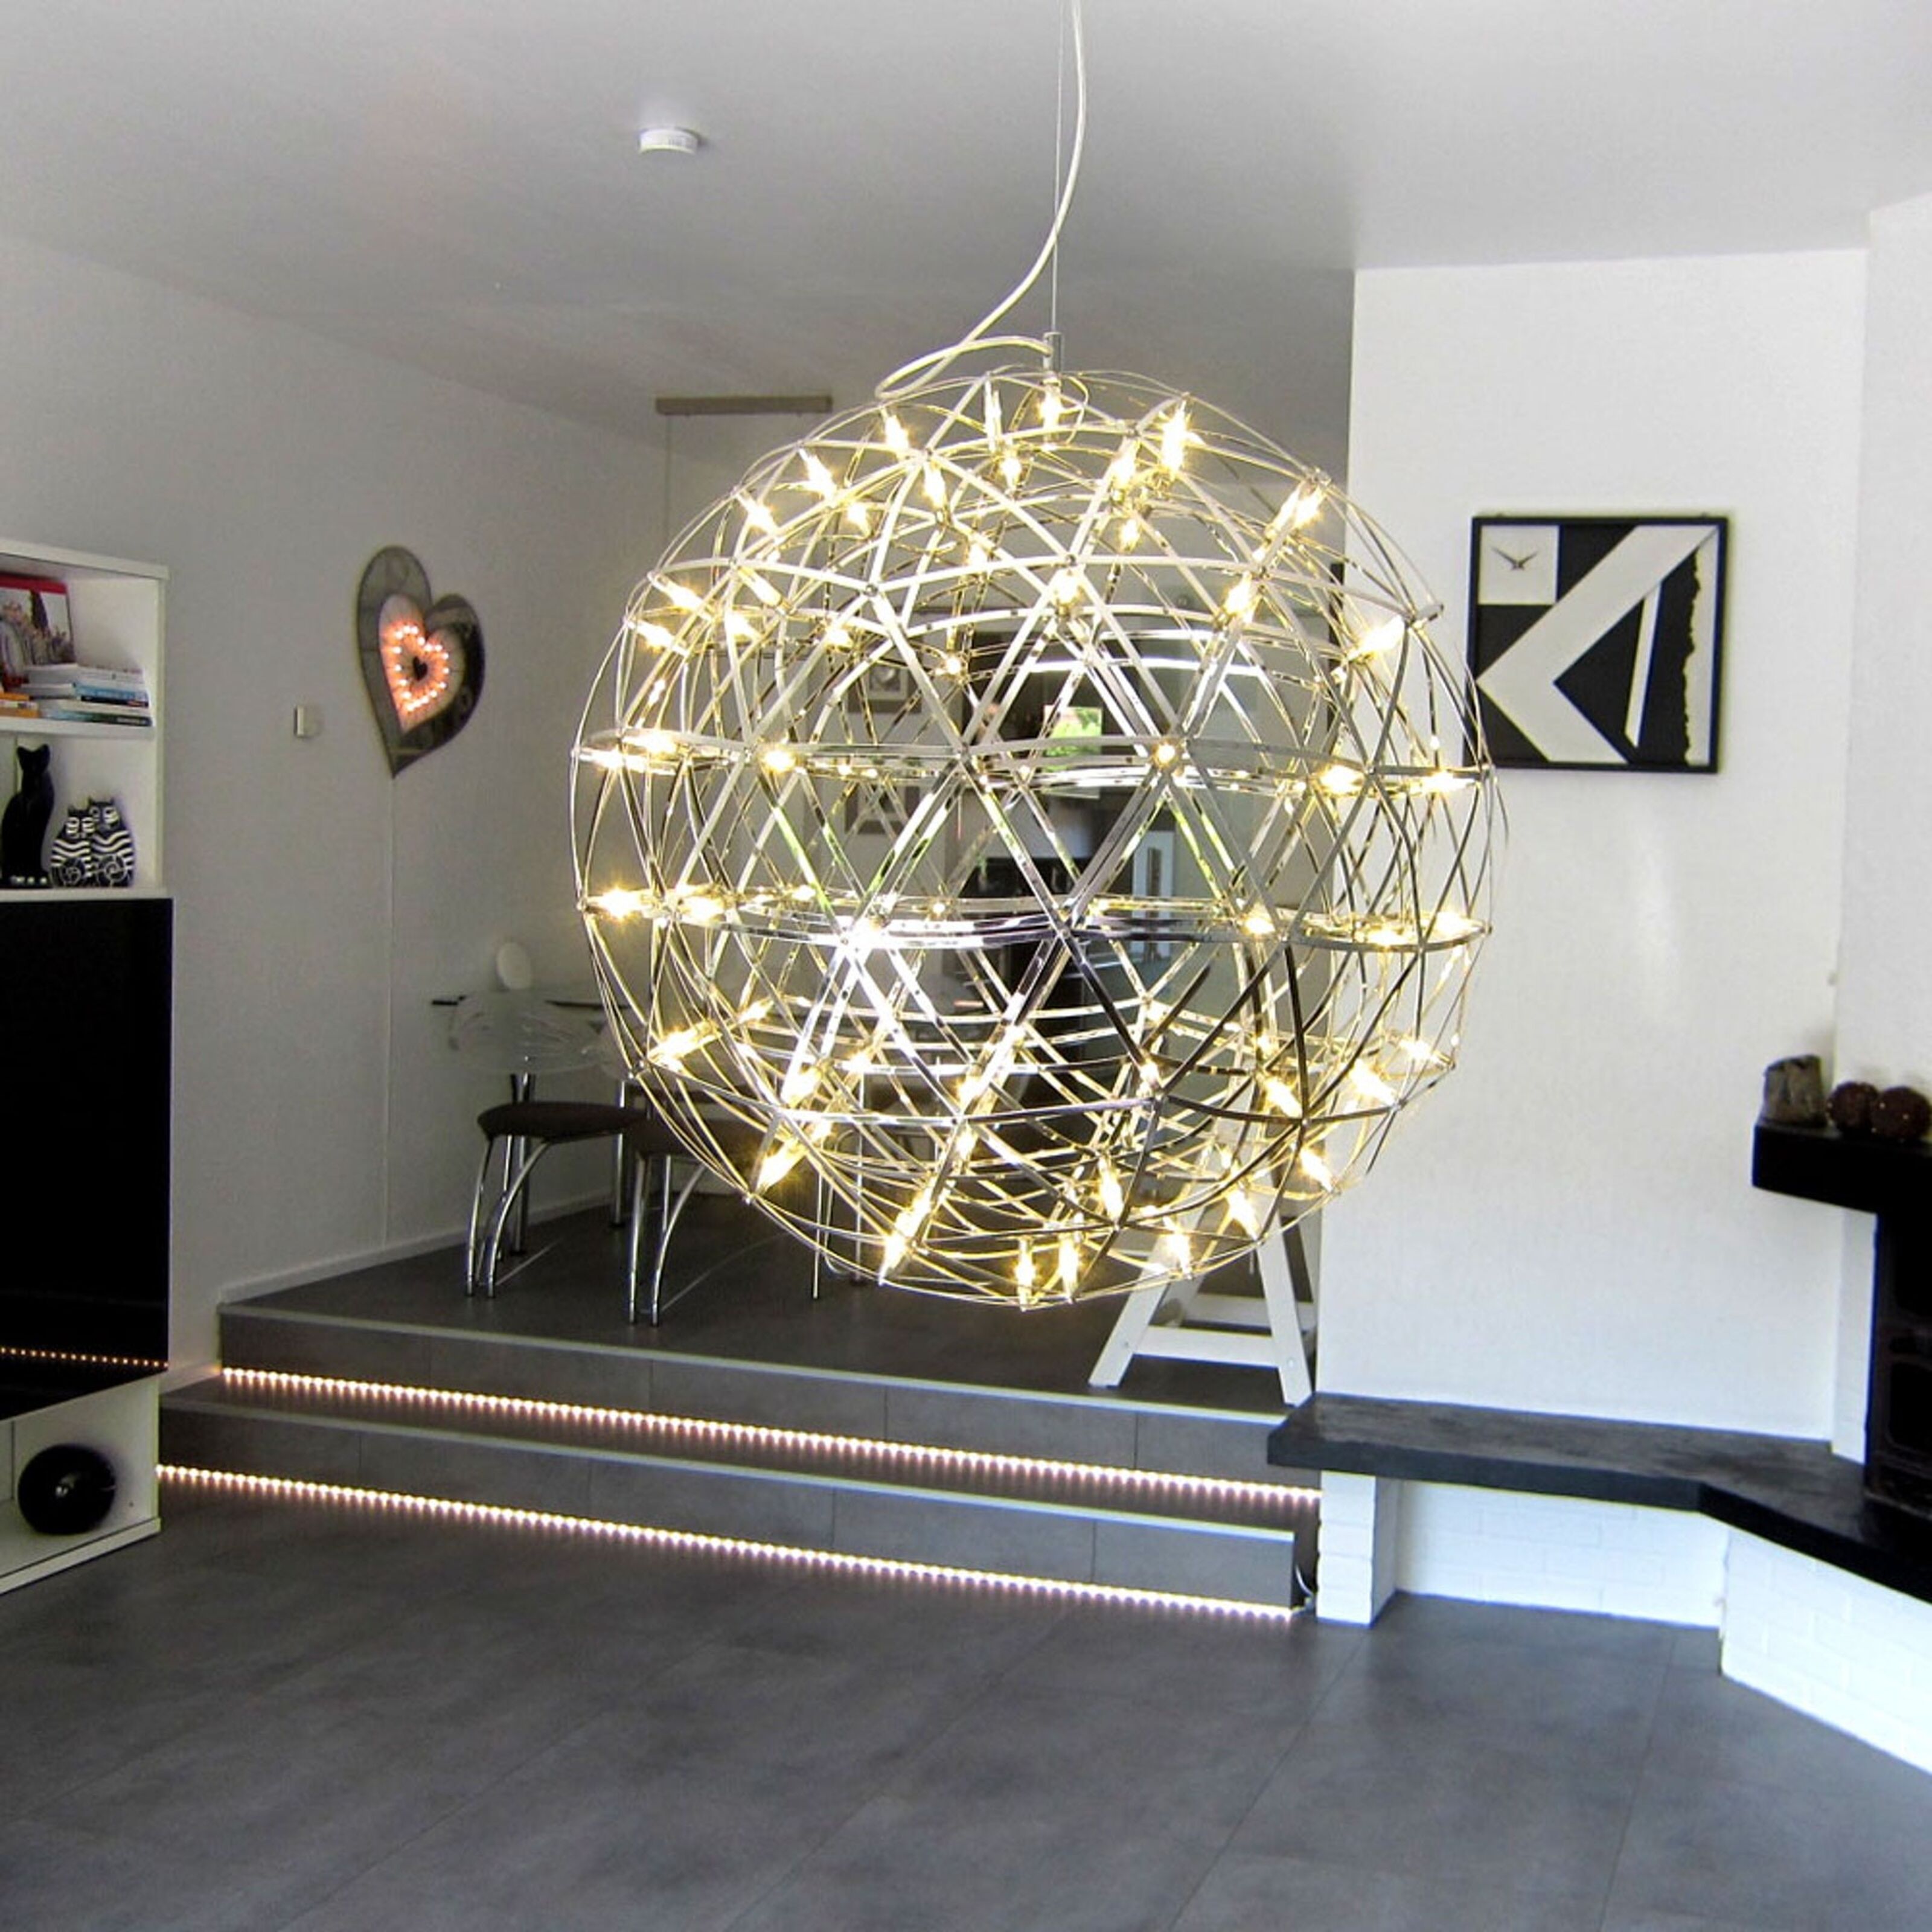 Buy wholesale s.LUCE pro metal light pendant 70 Atom LED dimmable ball